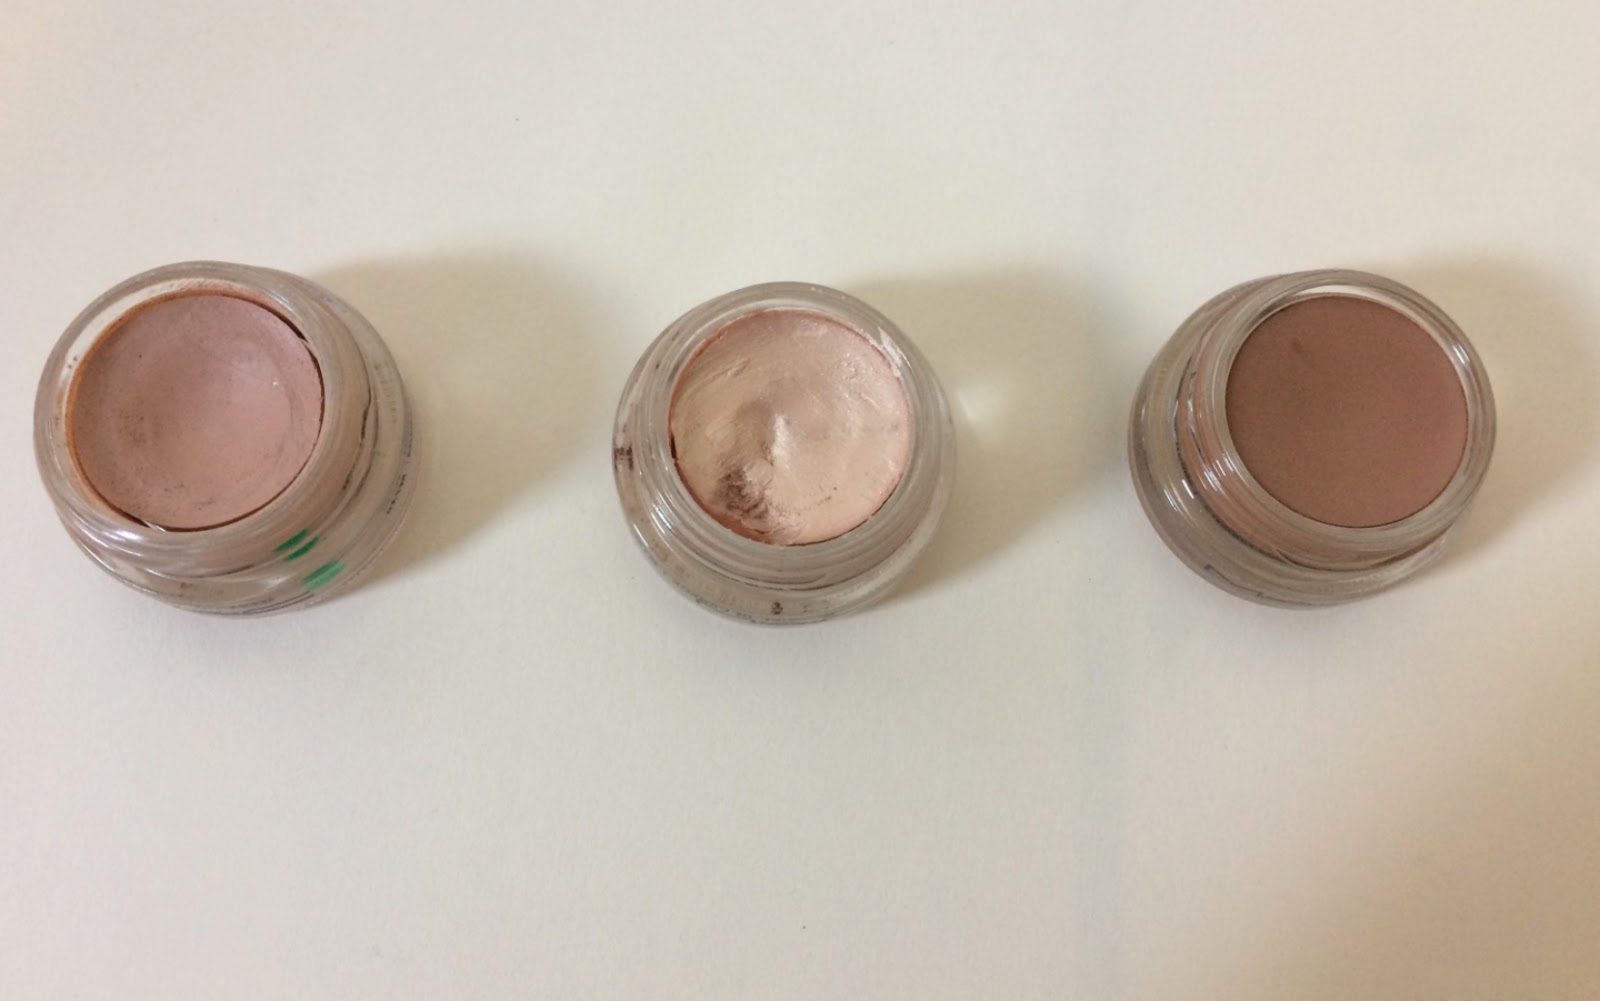 MAC Cosmetics Pro Longwear Paint Pot-Bare Study (Makeup,Eye,Eyeshadow)